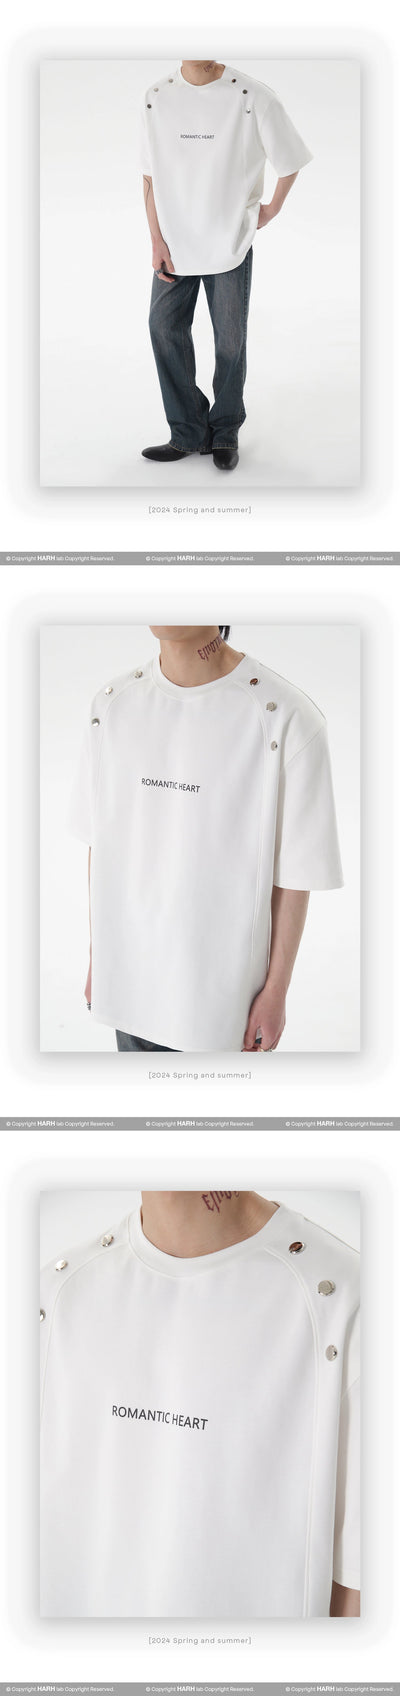 Romantic Heart Minimal Text T-Shirt Korean Street Fashion T-Shirt By HARH Shop Online at OH Vault